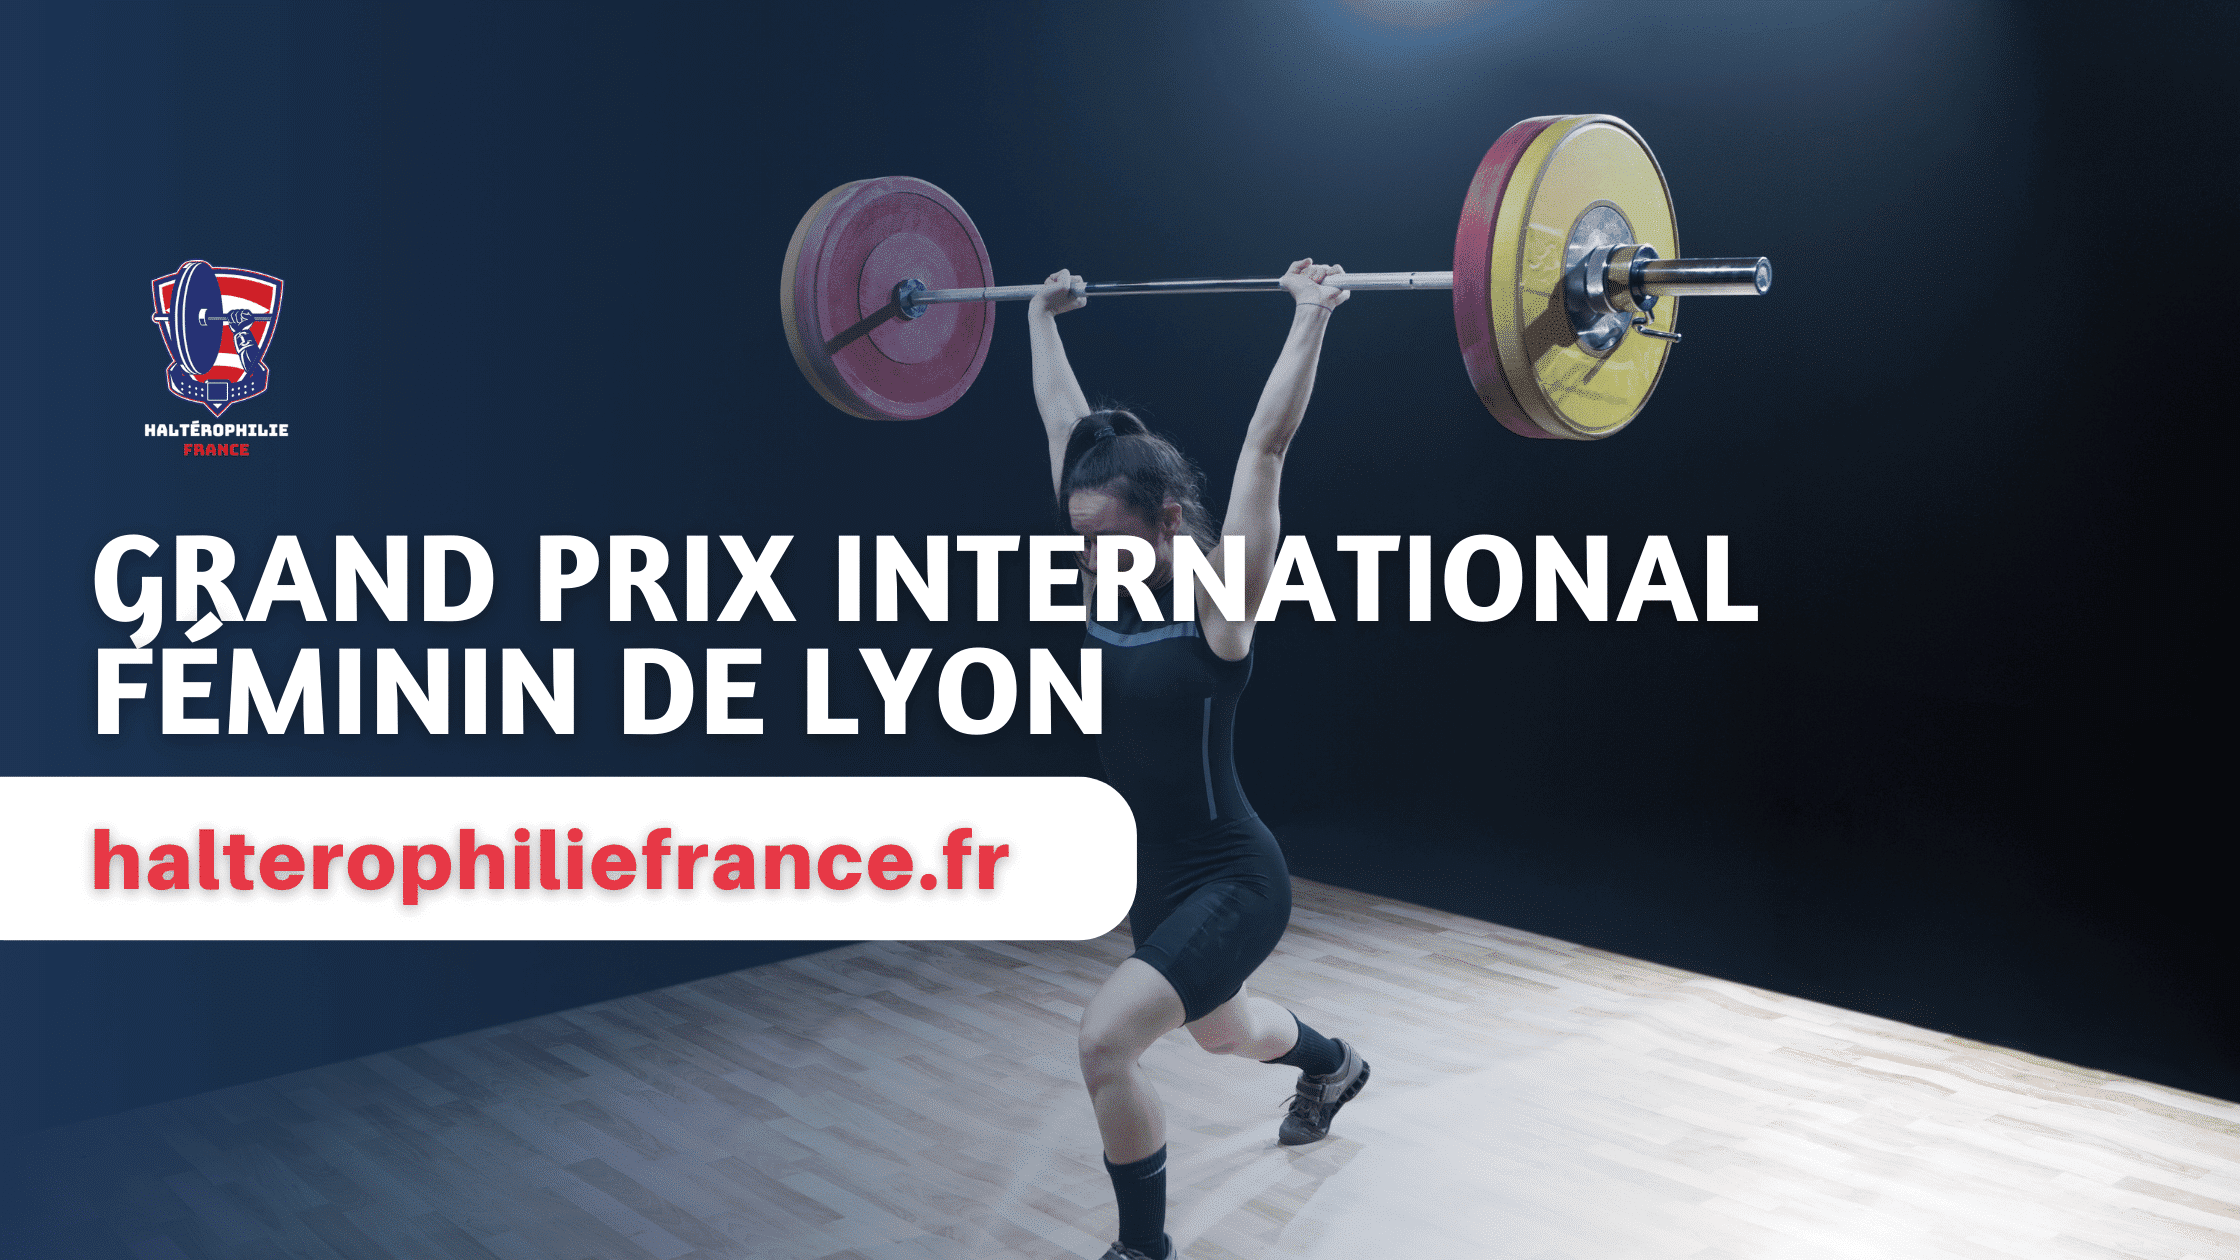 Grand prix international Feminin de Lyon halterophilie